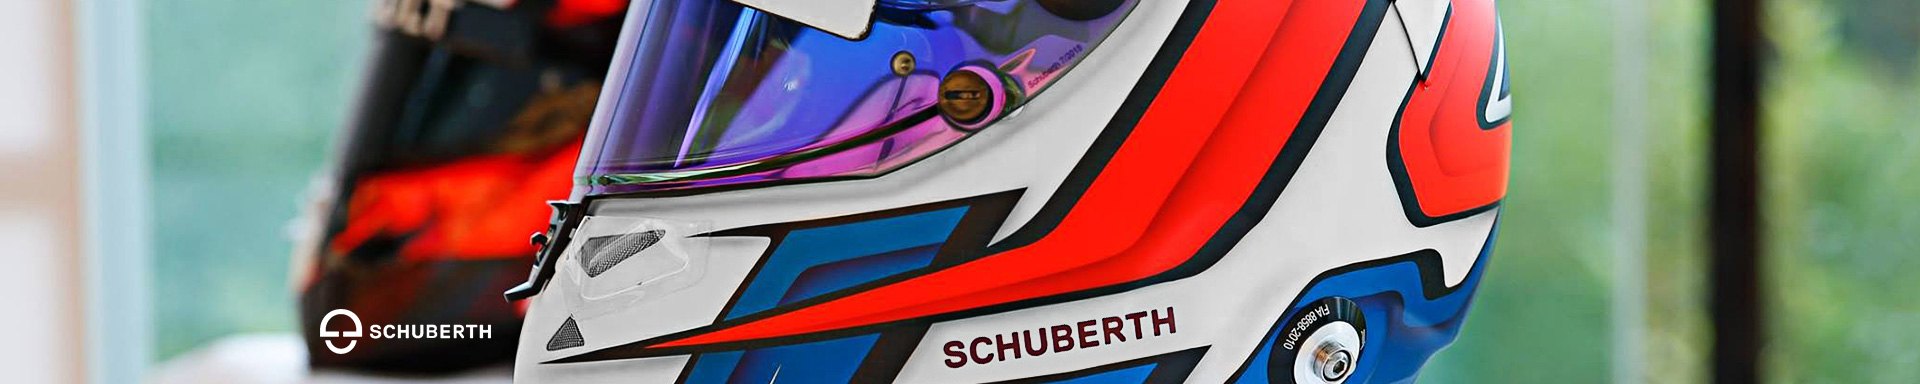 Schuberth Dual Sport Helmets